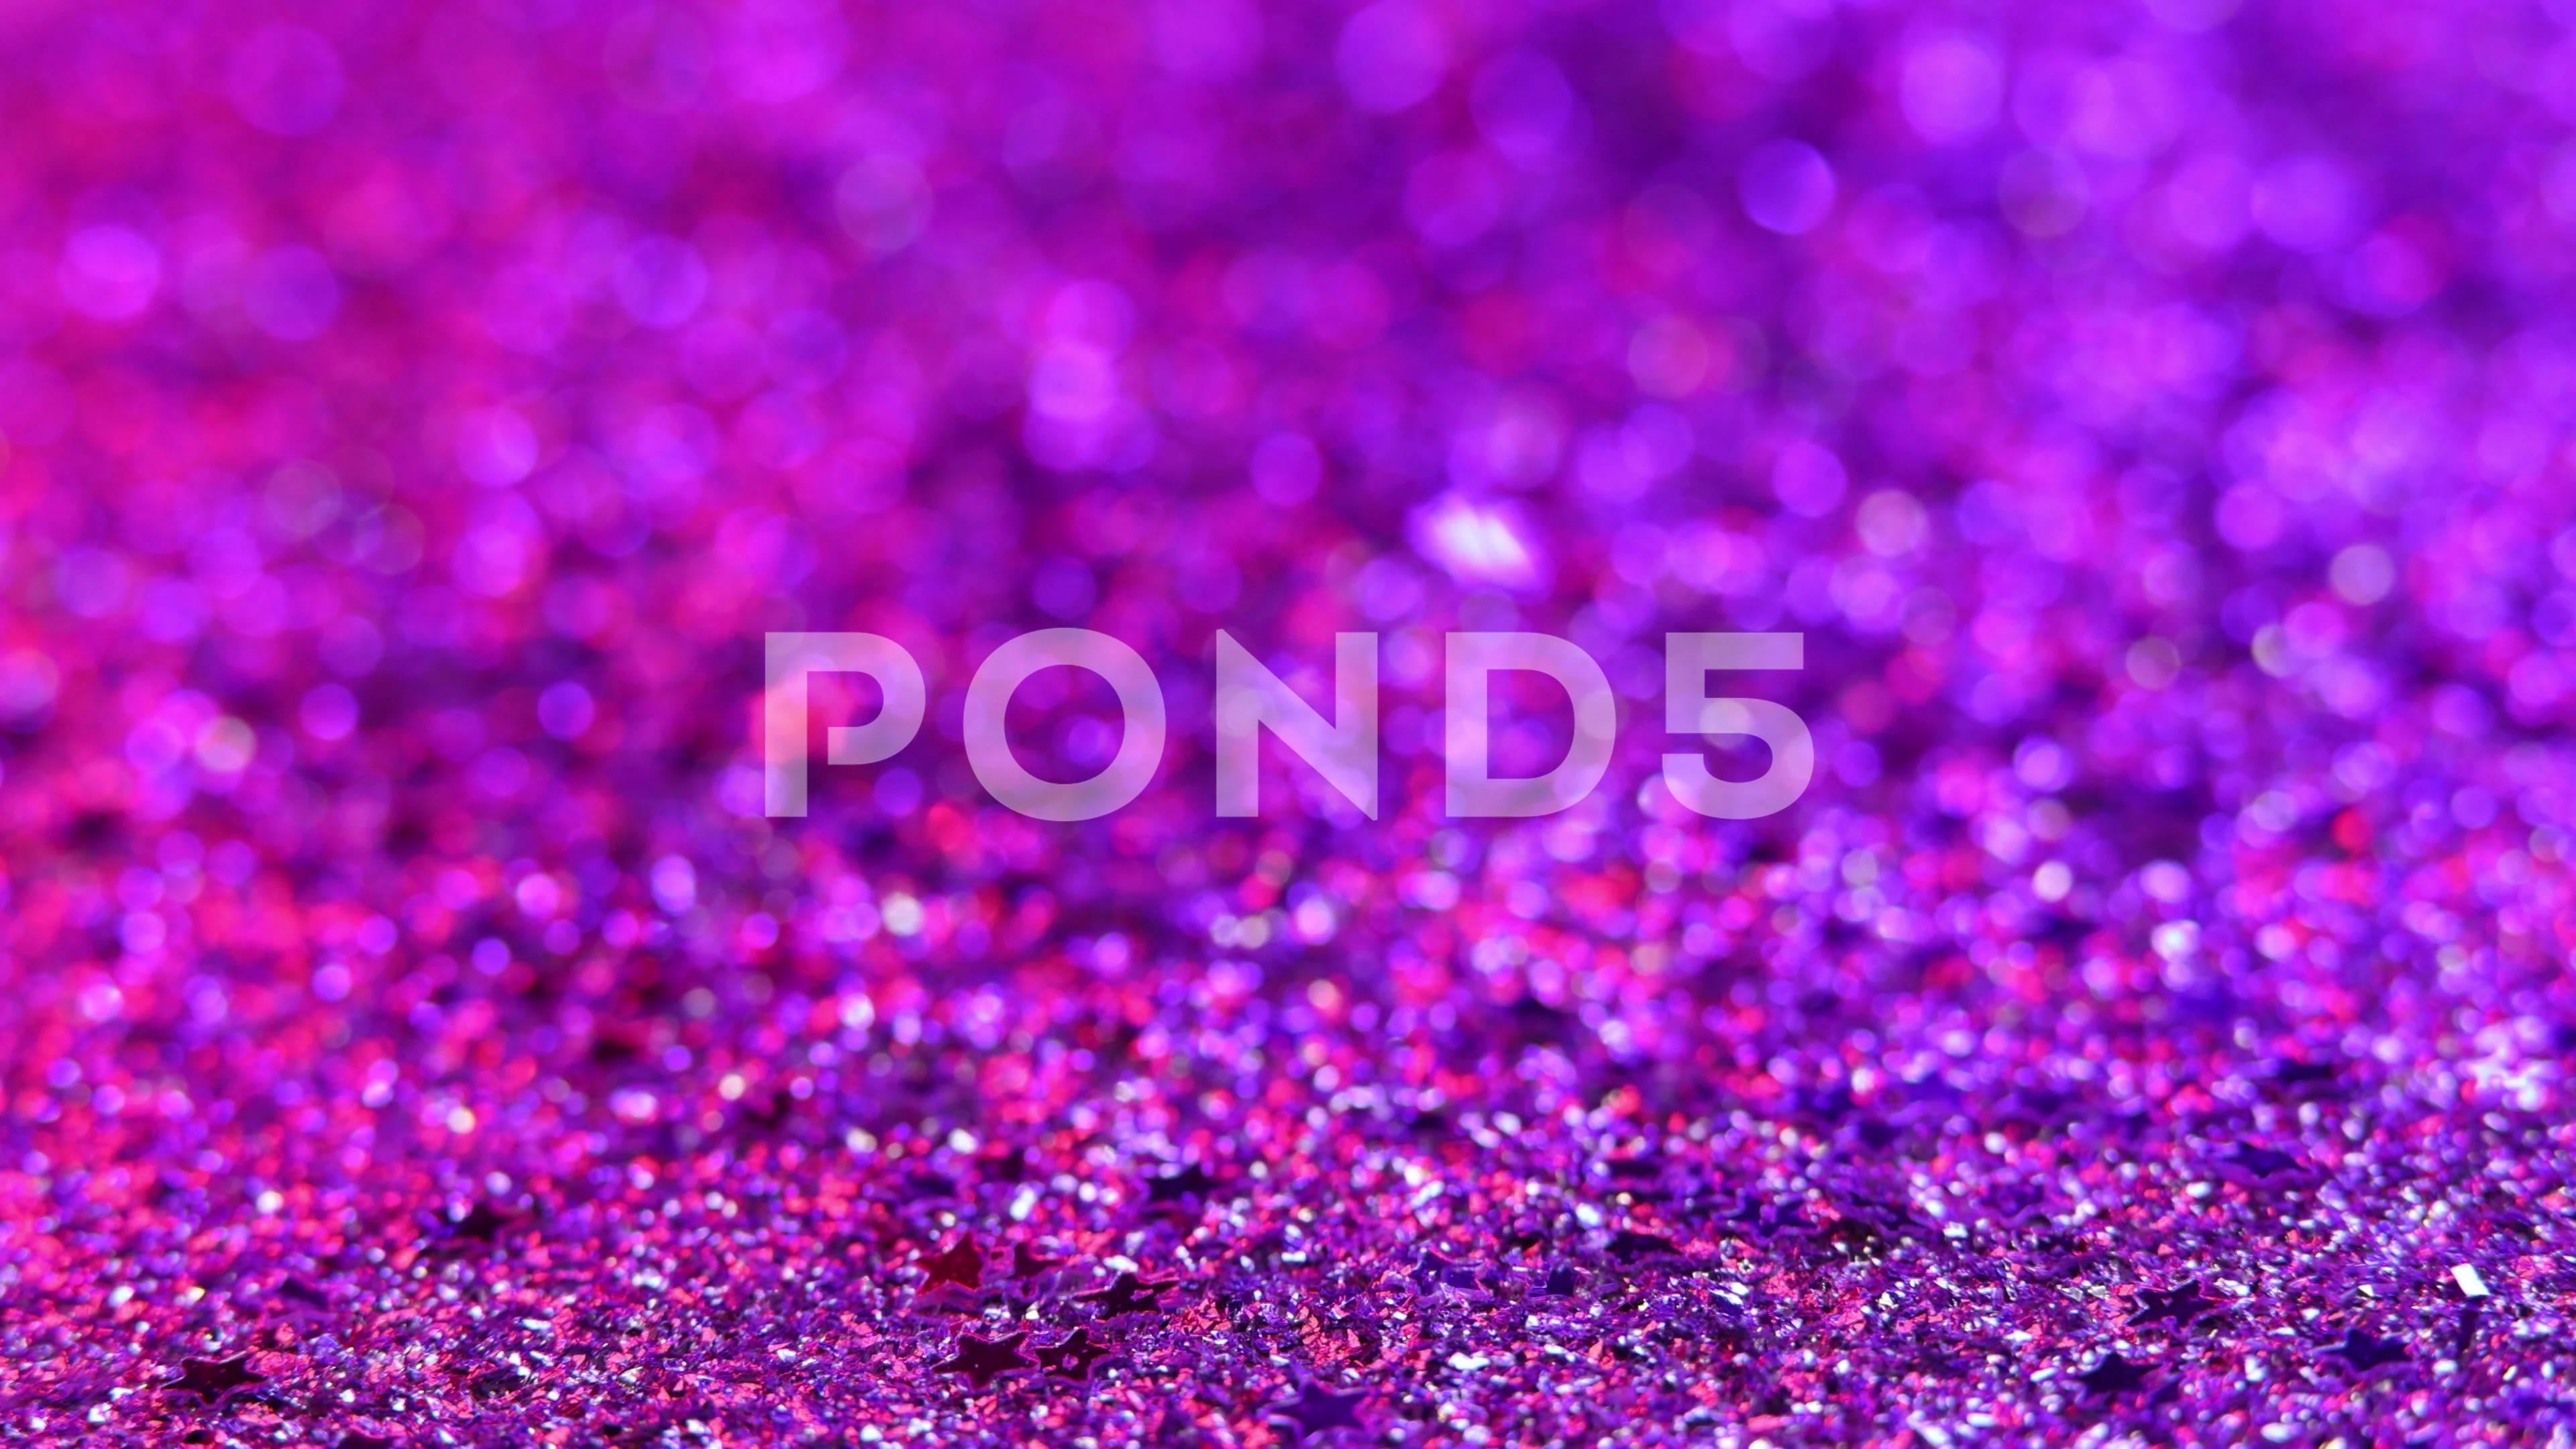 97010 Dark Purple Glitter Images Stock Photos  Vectors  Shutterstock